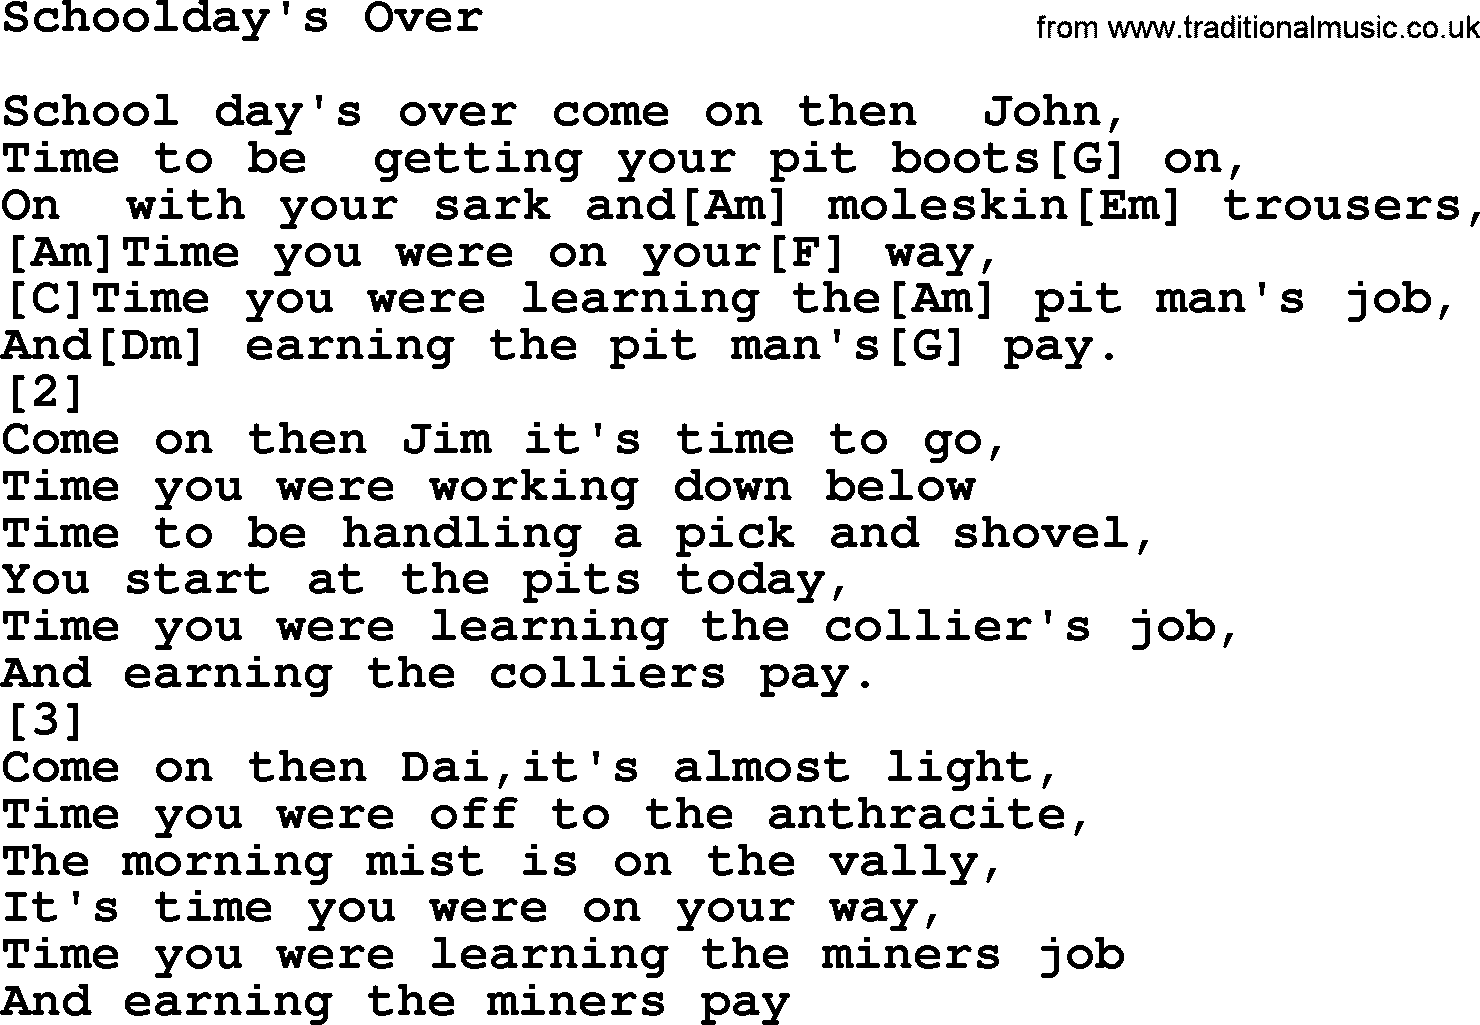 The Dubliners song: Schoolday's Over, lyrics